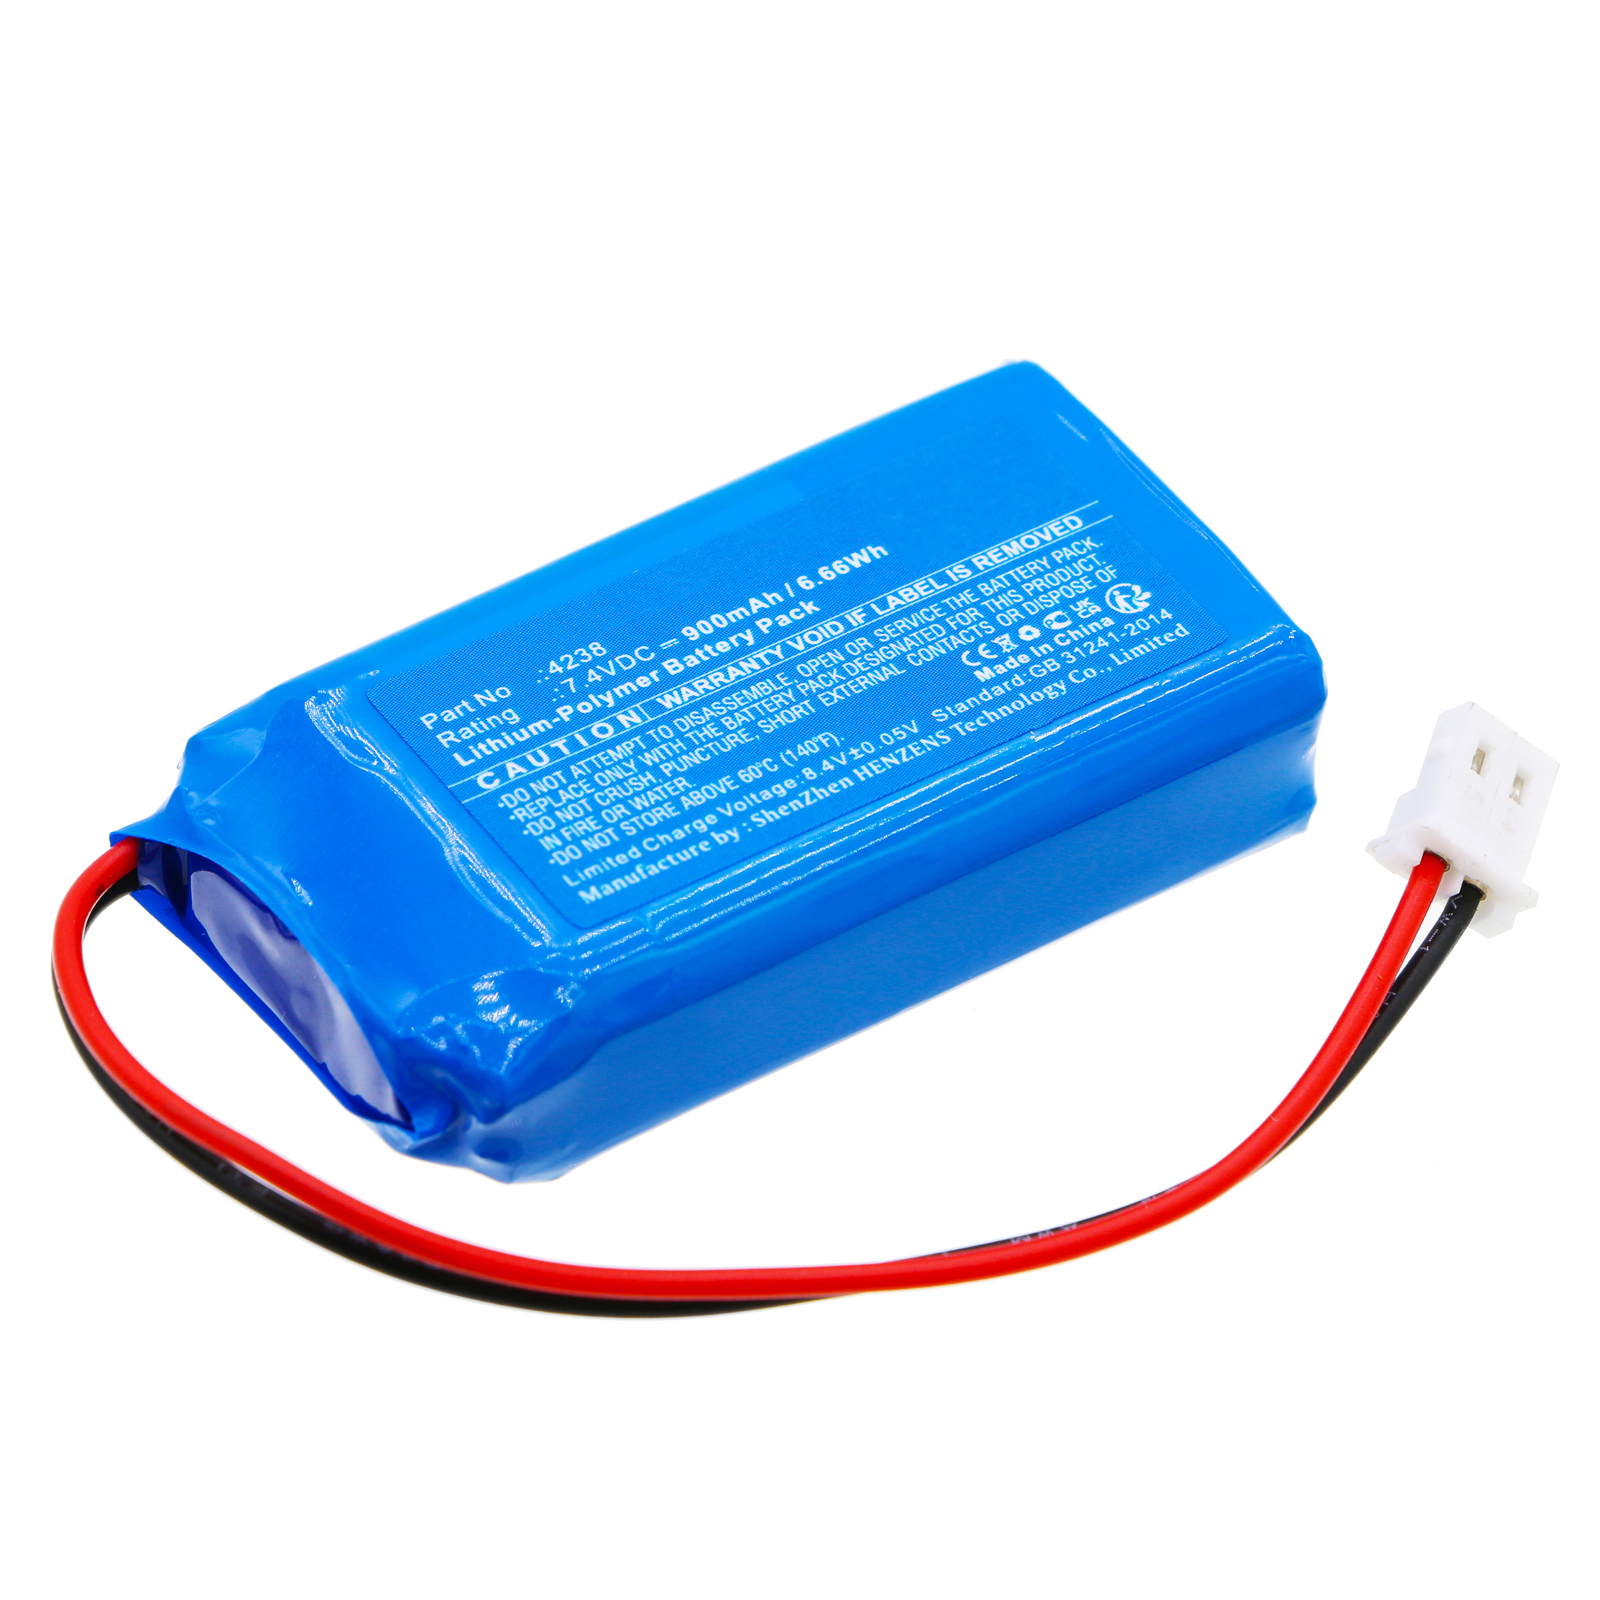 Synergy Digital Alarm System Battery, Compatible with Bticino 4238 Alarm System Battery (Li-Pol, 7.4V, 900mAh)